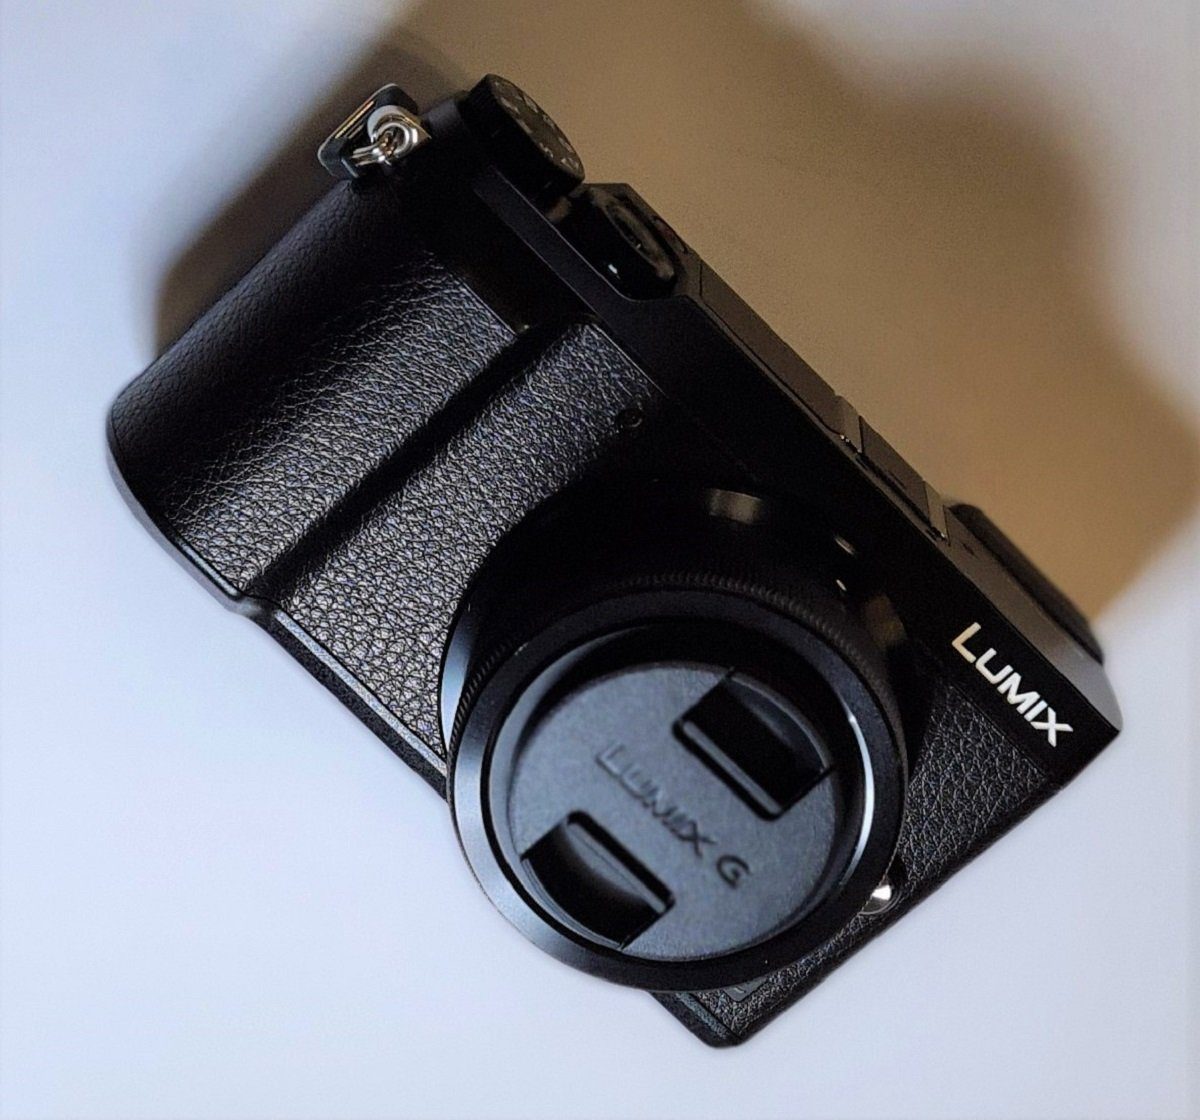 Panasonic Lumix GX80+3,5-5,6/12-32 schwarz G mm Systemkamera Kit